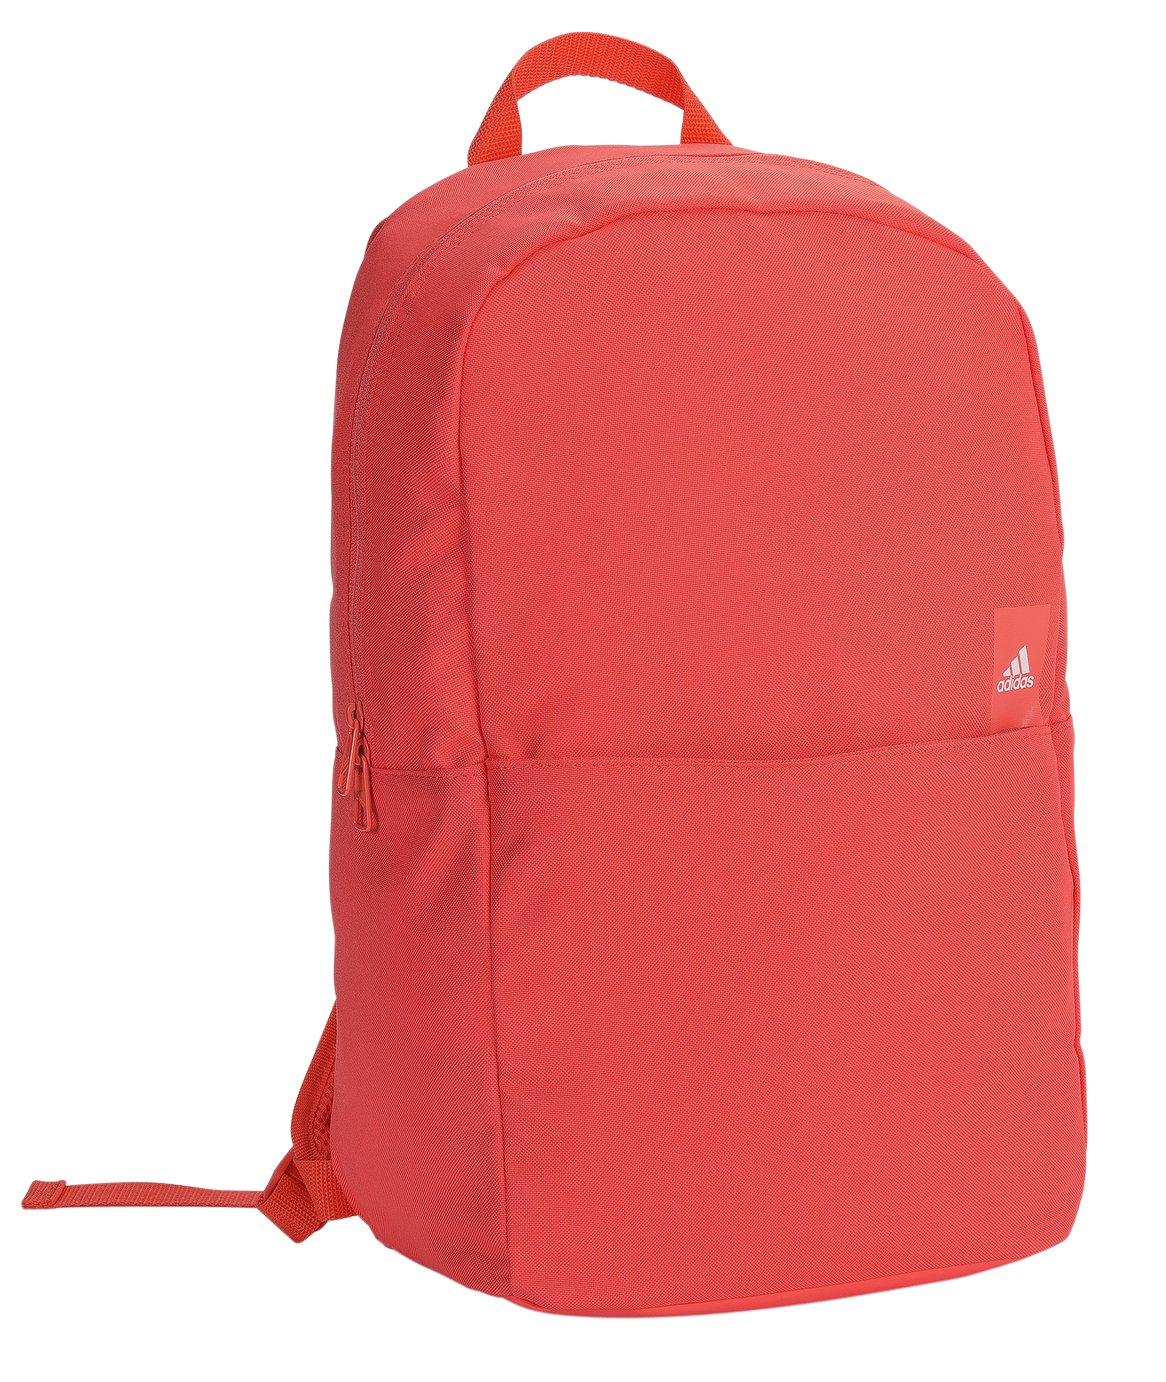 'Adidas Classic Medium Backpack - Coral